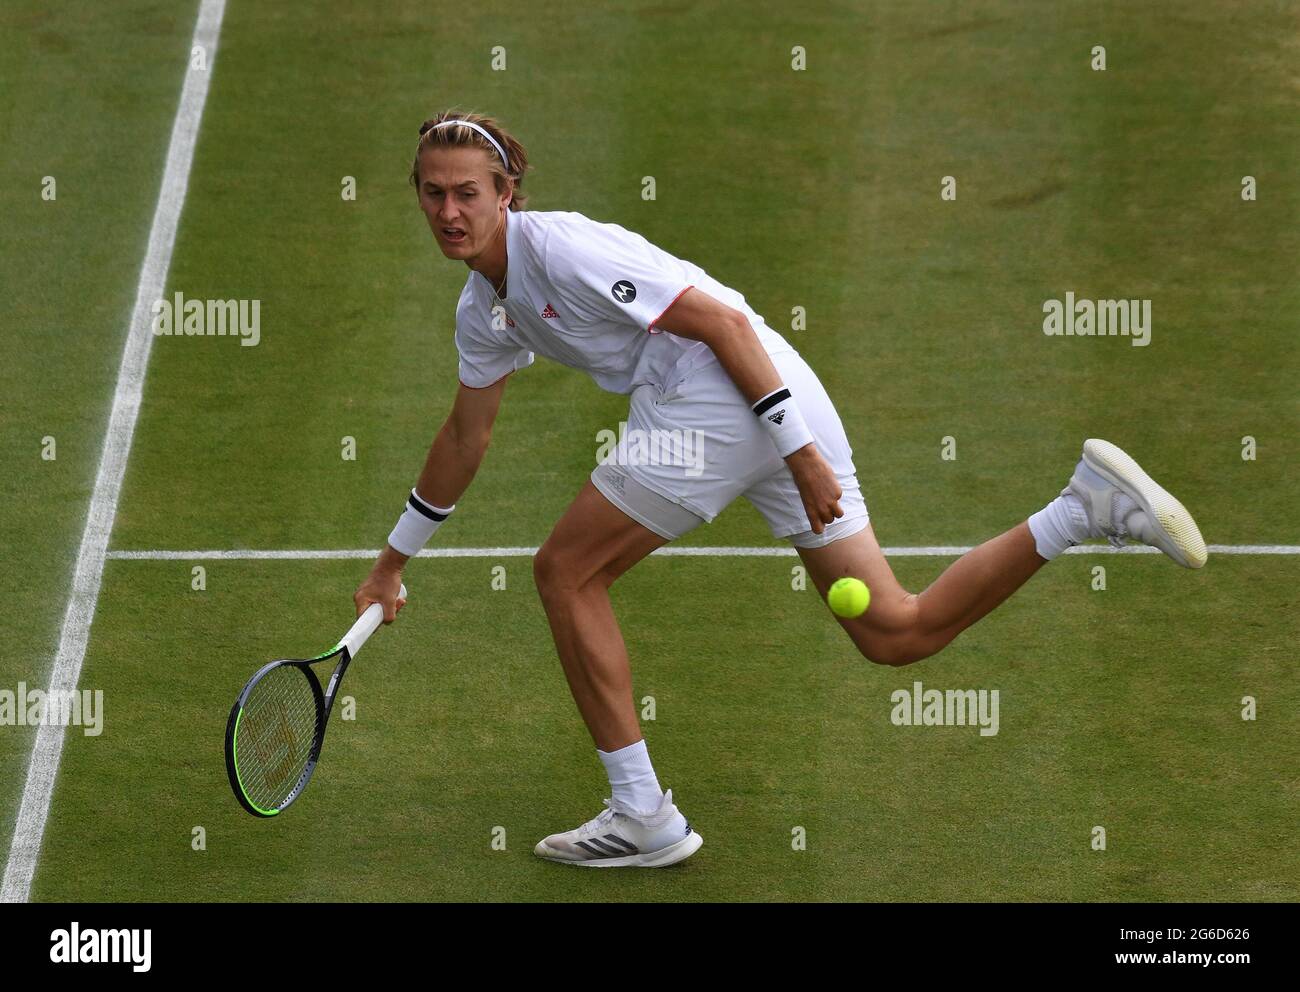 Karen khachanov in wimbledon tennis hi-res stock photography and images -  Page 3 - Alamy